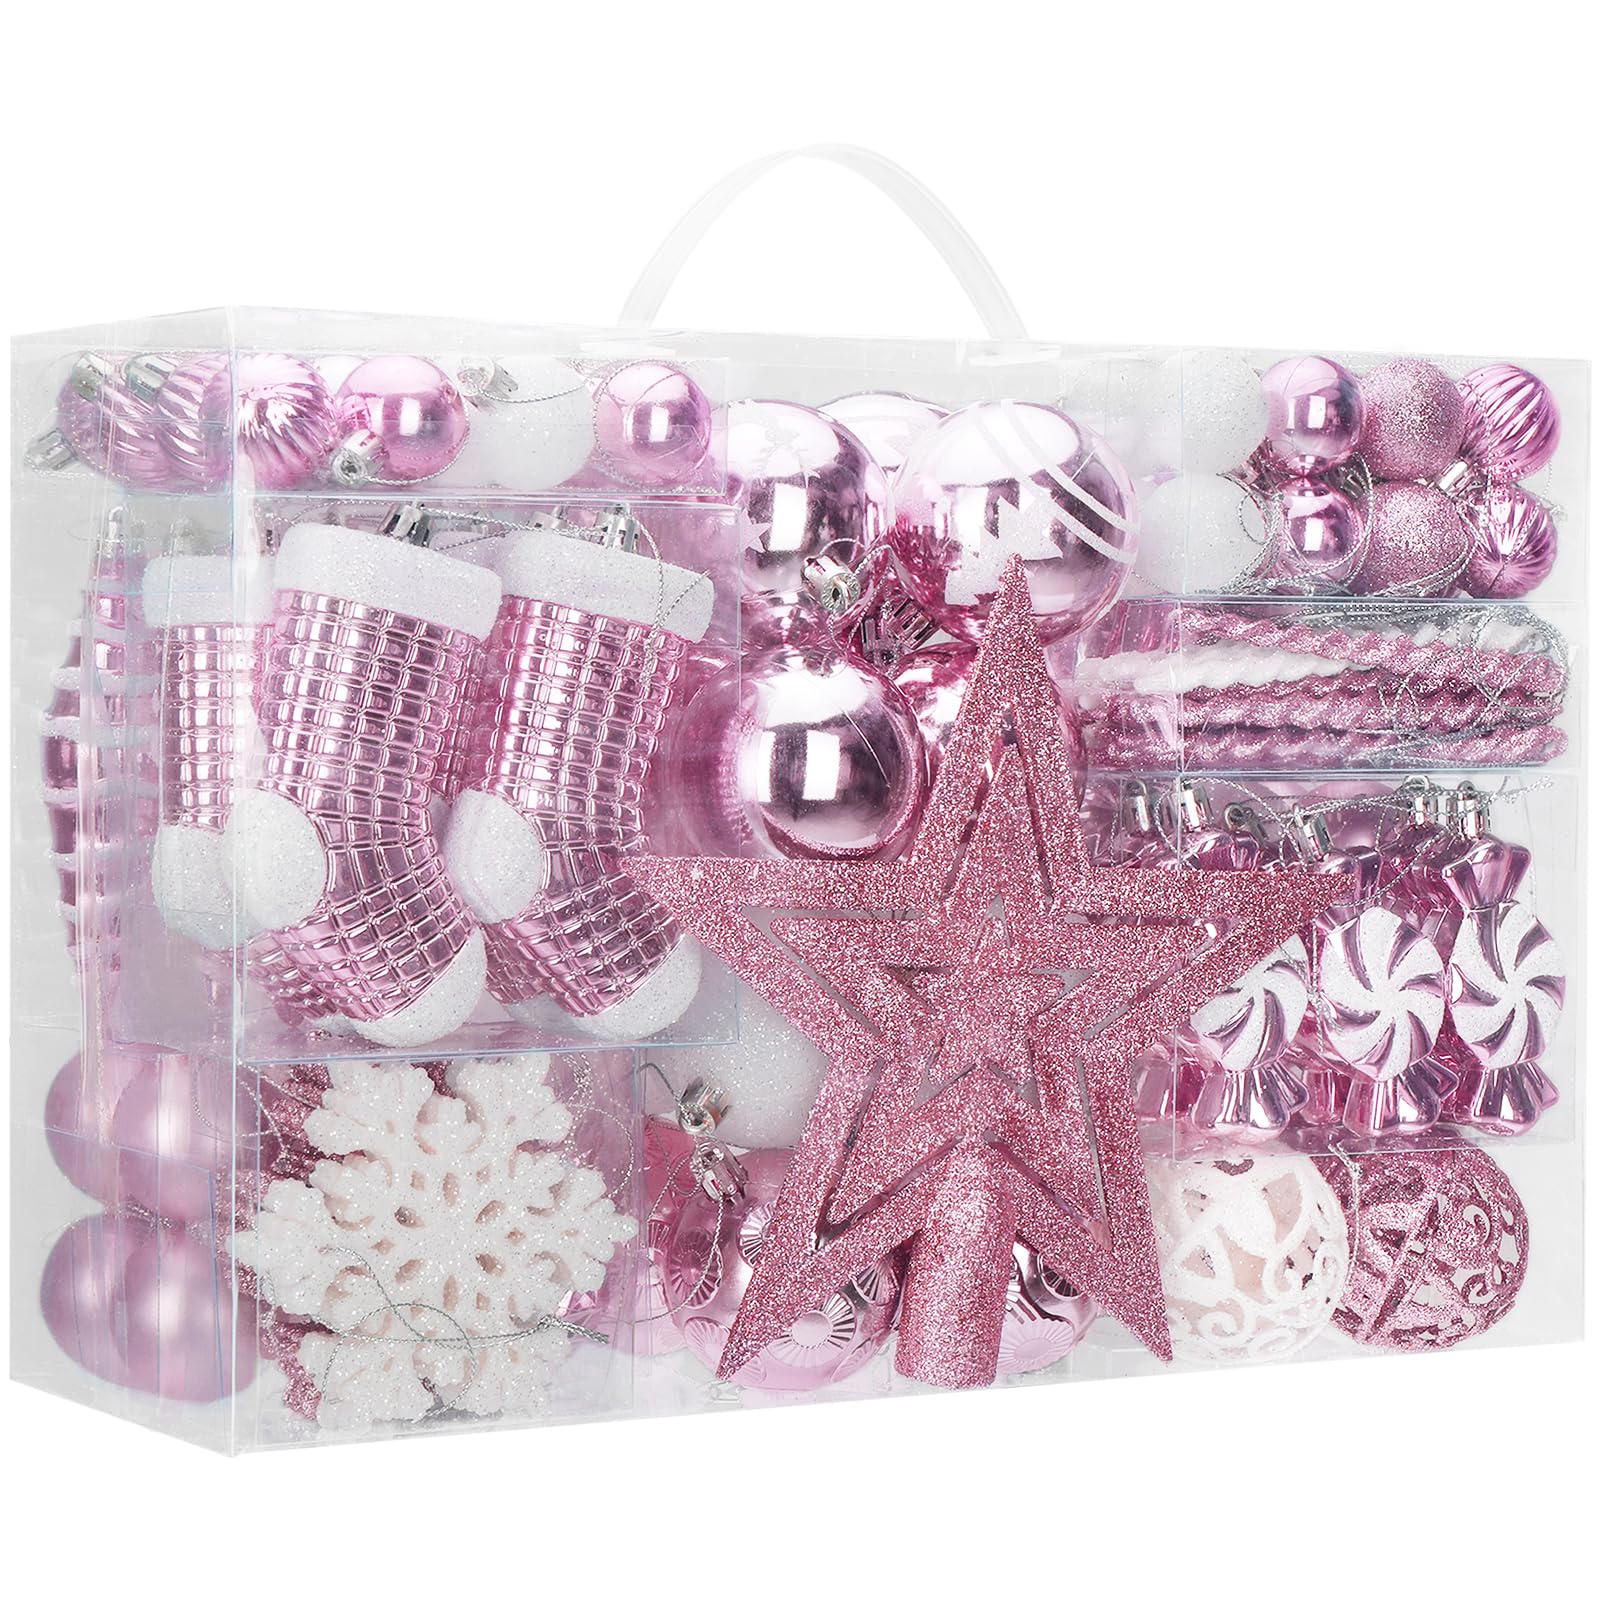 SOLEDI  128 Pcs Christmas Ball Ornament Set Assorted Pink